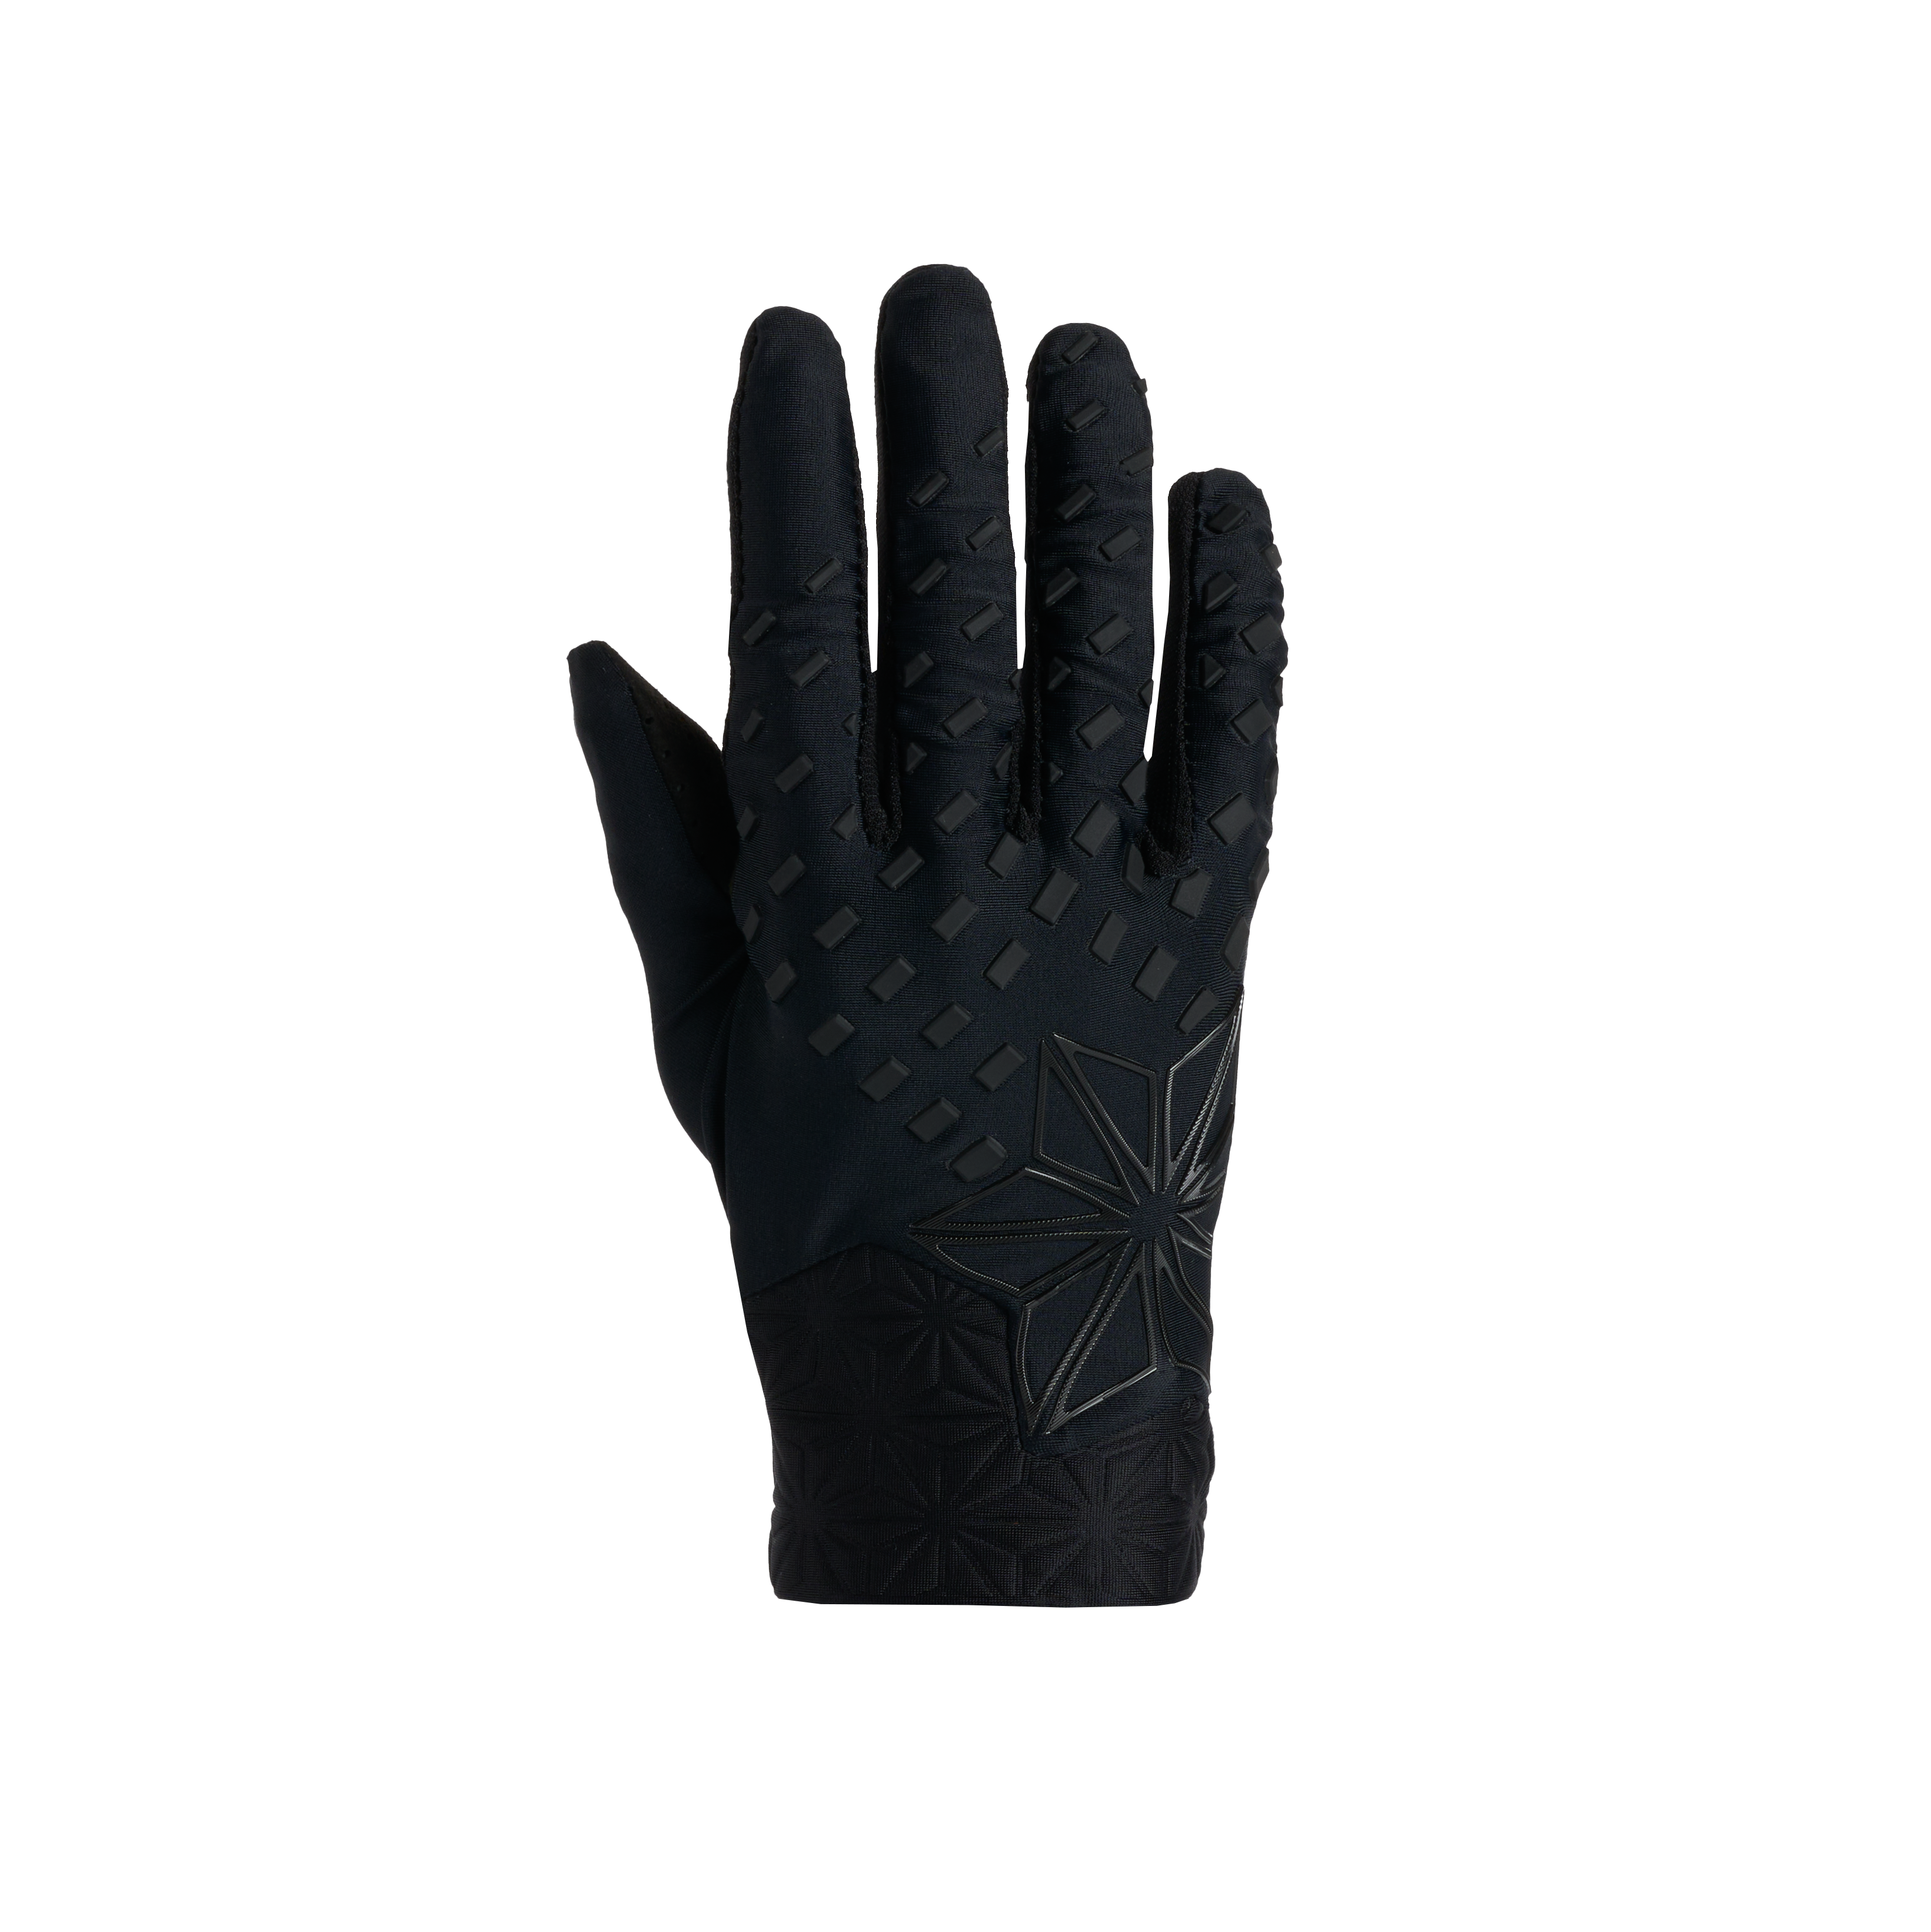 Supacaz Galactic Glove